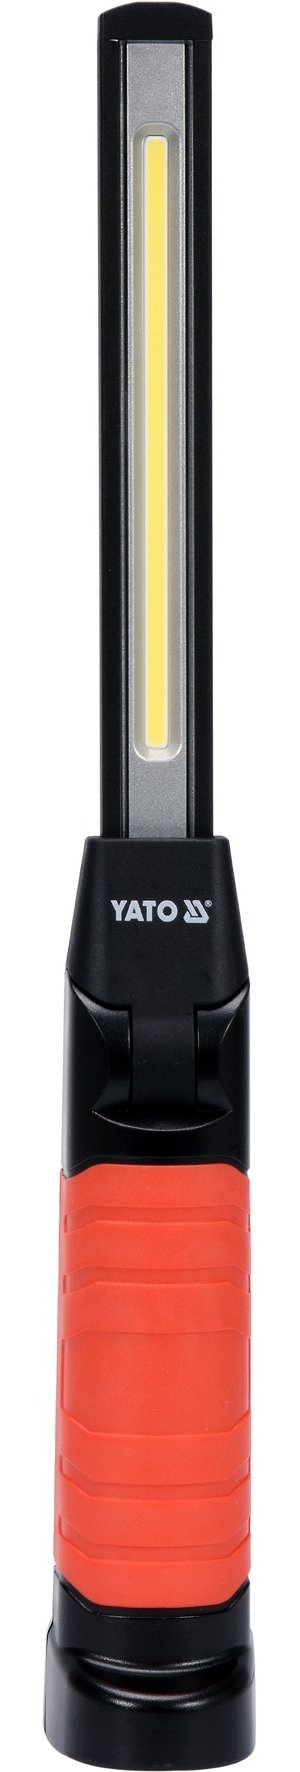 YT-08518 YATO WORKSHOP LAMP COB LED 5W + 3W YT-08518 YATO